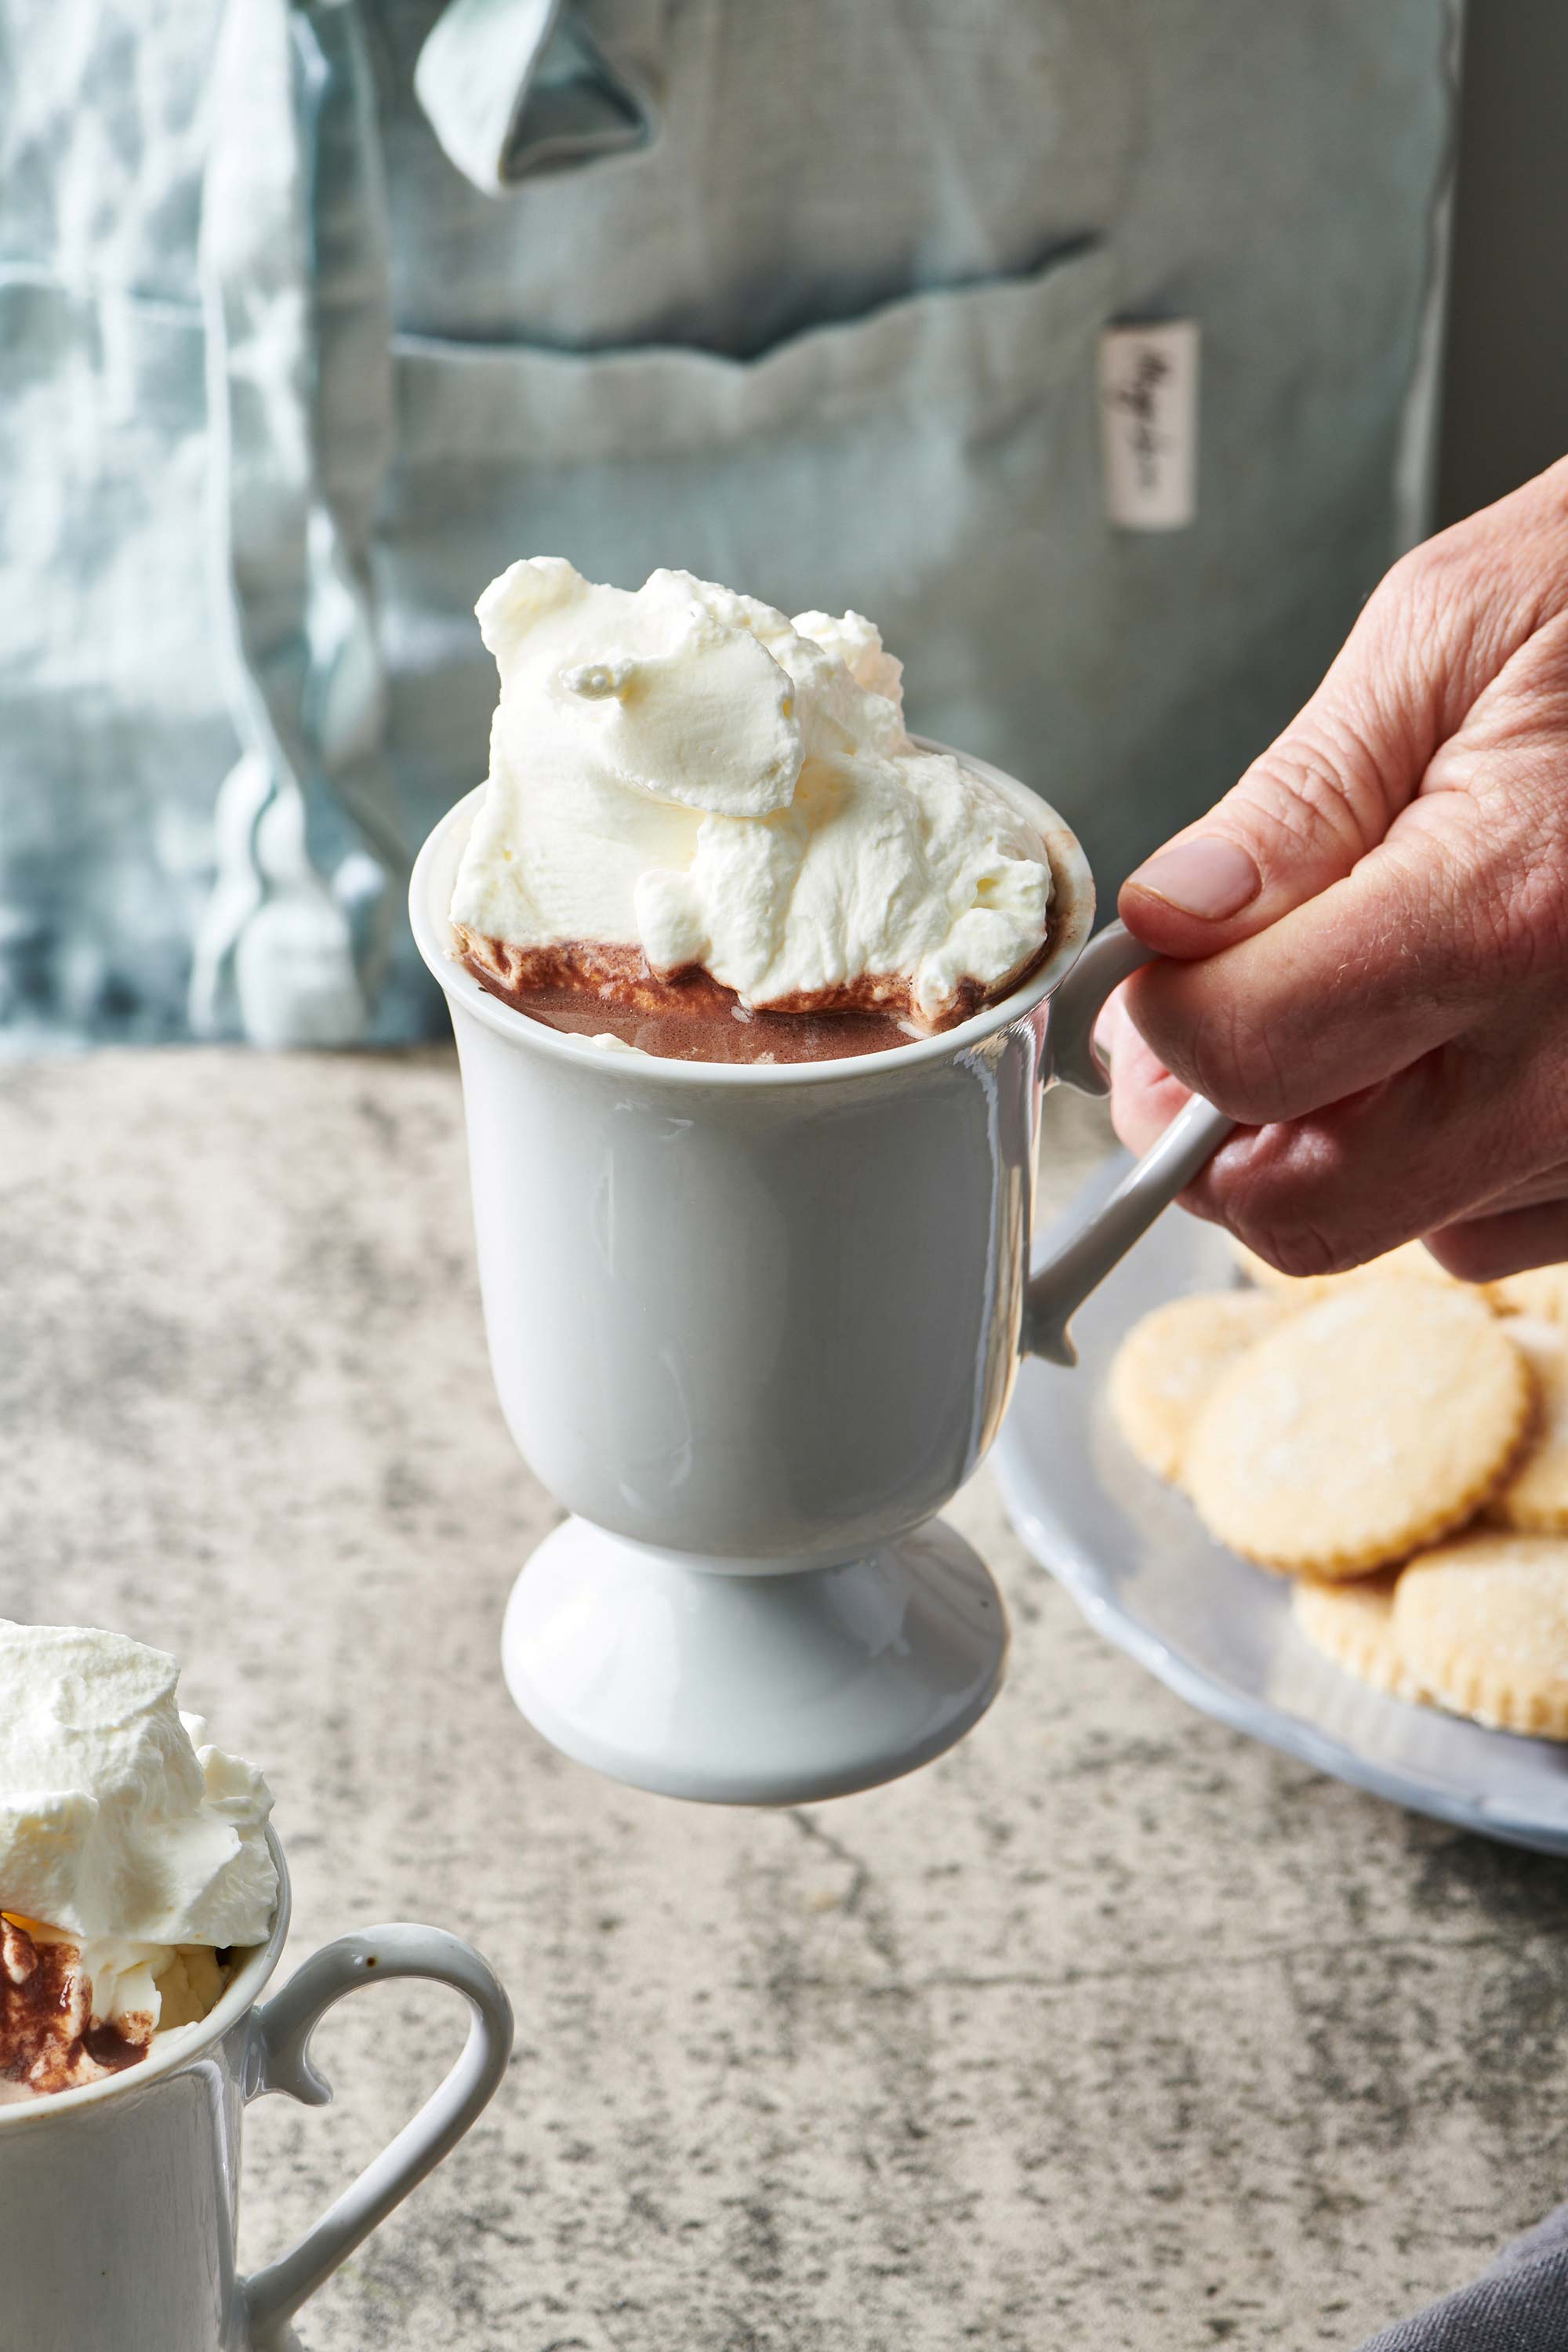 Hand holding a small mug of Hot Chocolate.